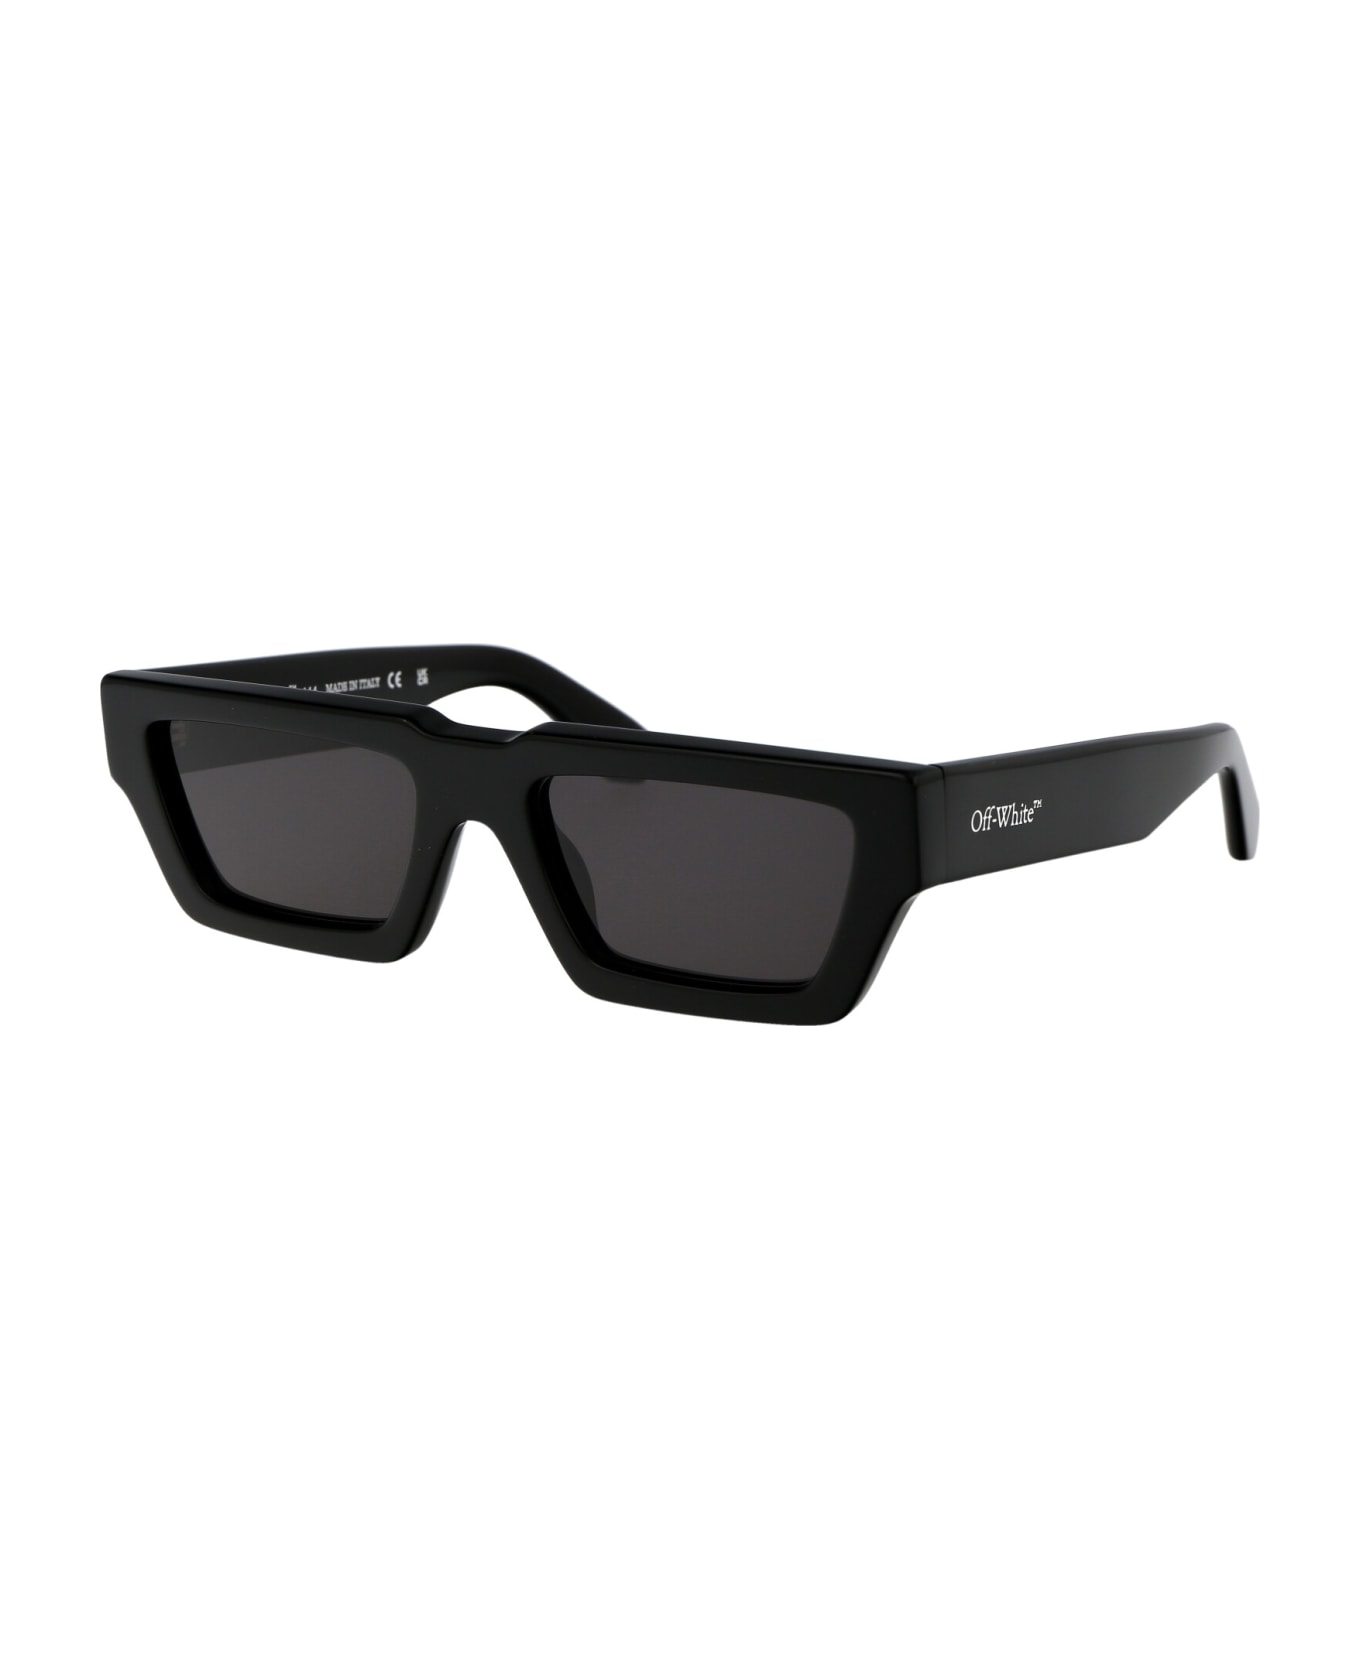 Off-White Manchester Sunglasses - 1007 BLACK